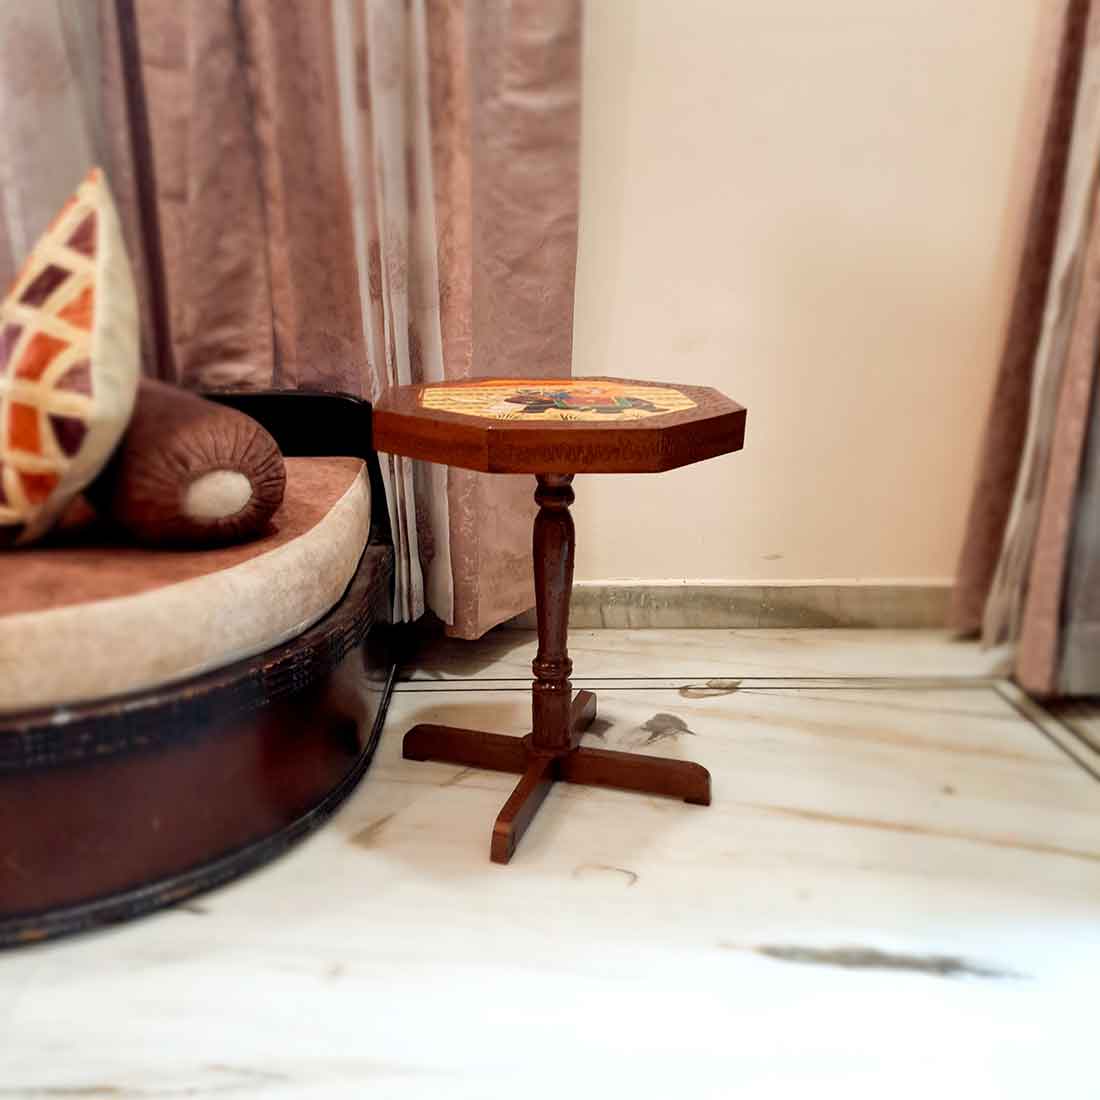 End Tables Wooden | Side Table | Stool - for Living Room, Corner Decor, Home Decor & Gifts - 20 Inch - Apkamart